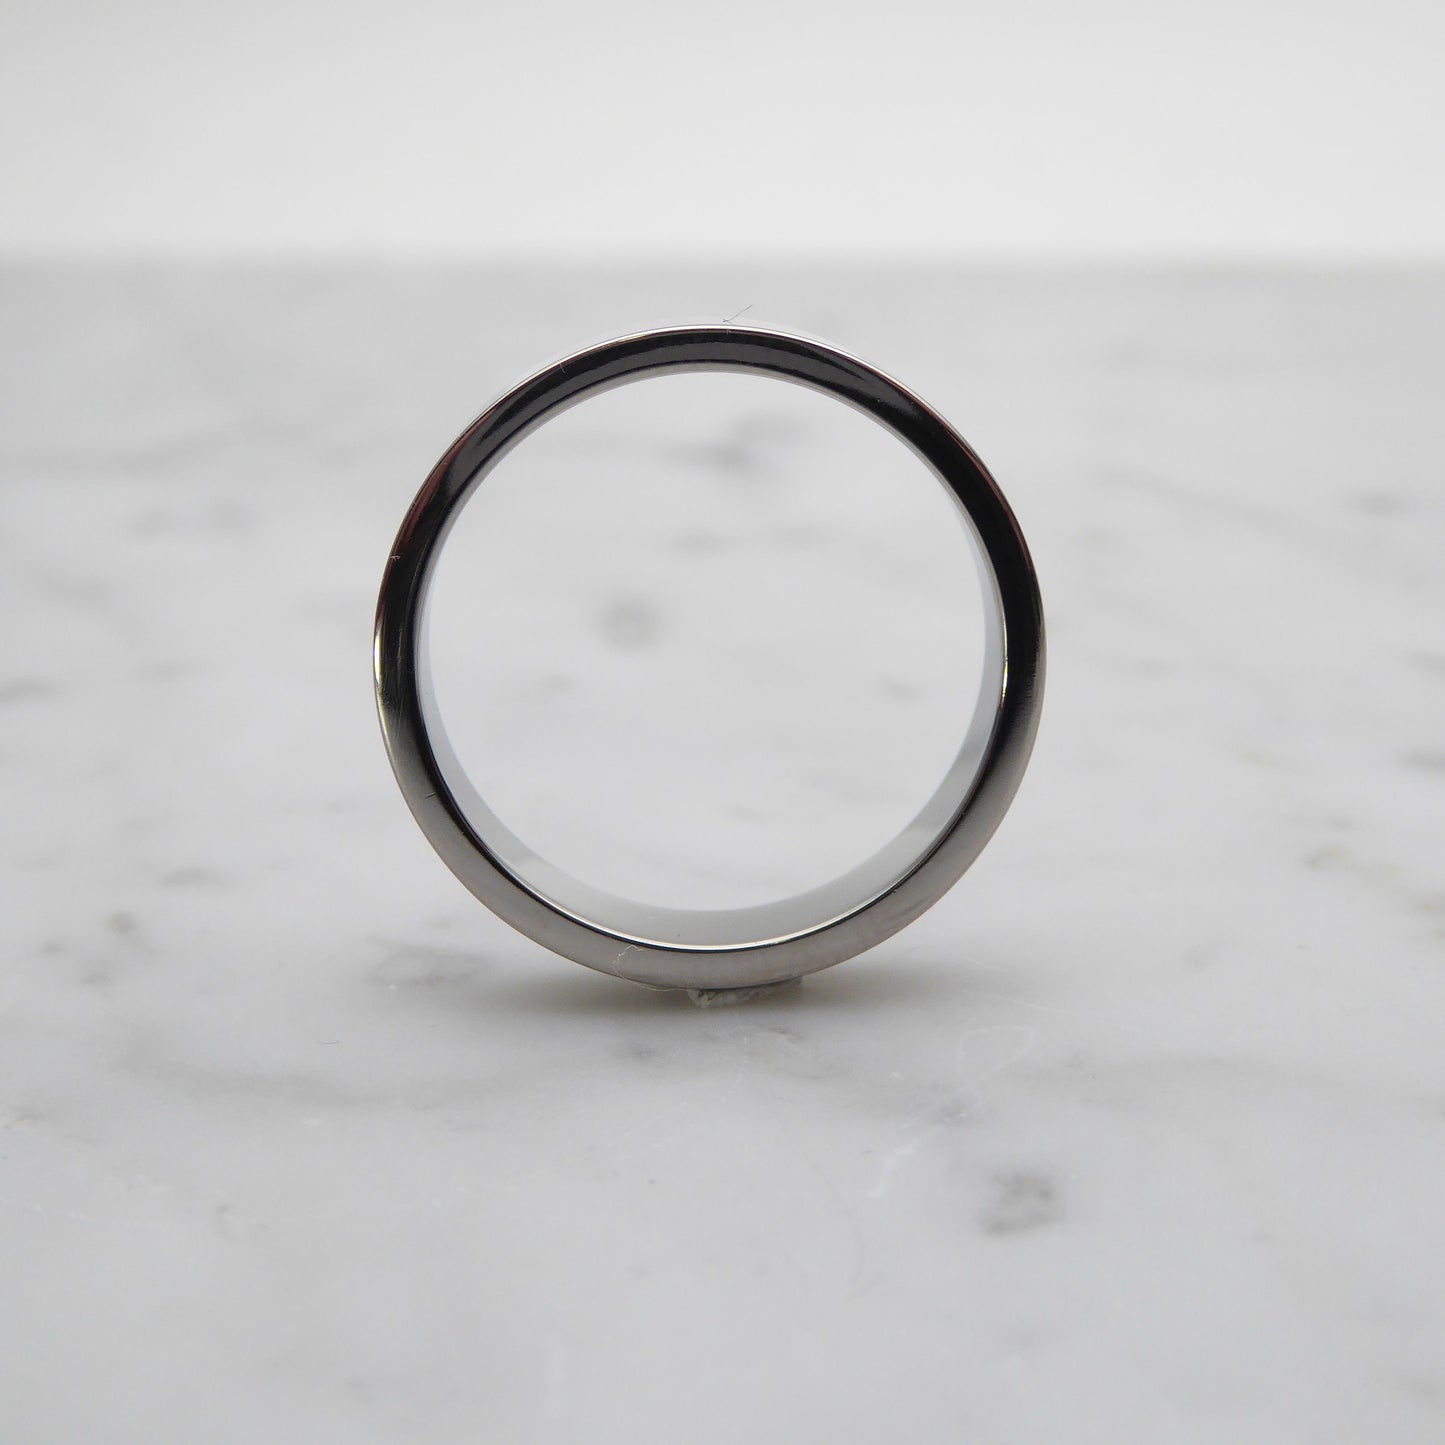 5mm Titanium Flat / Square Shape Plain band Wedding Ring - available in polished and brushed finishes